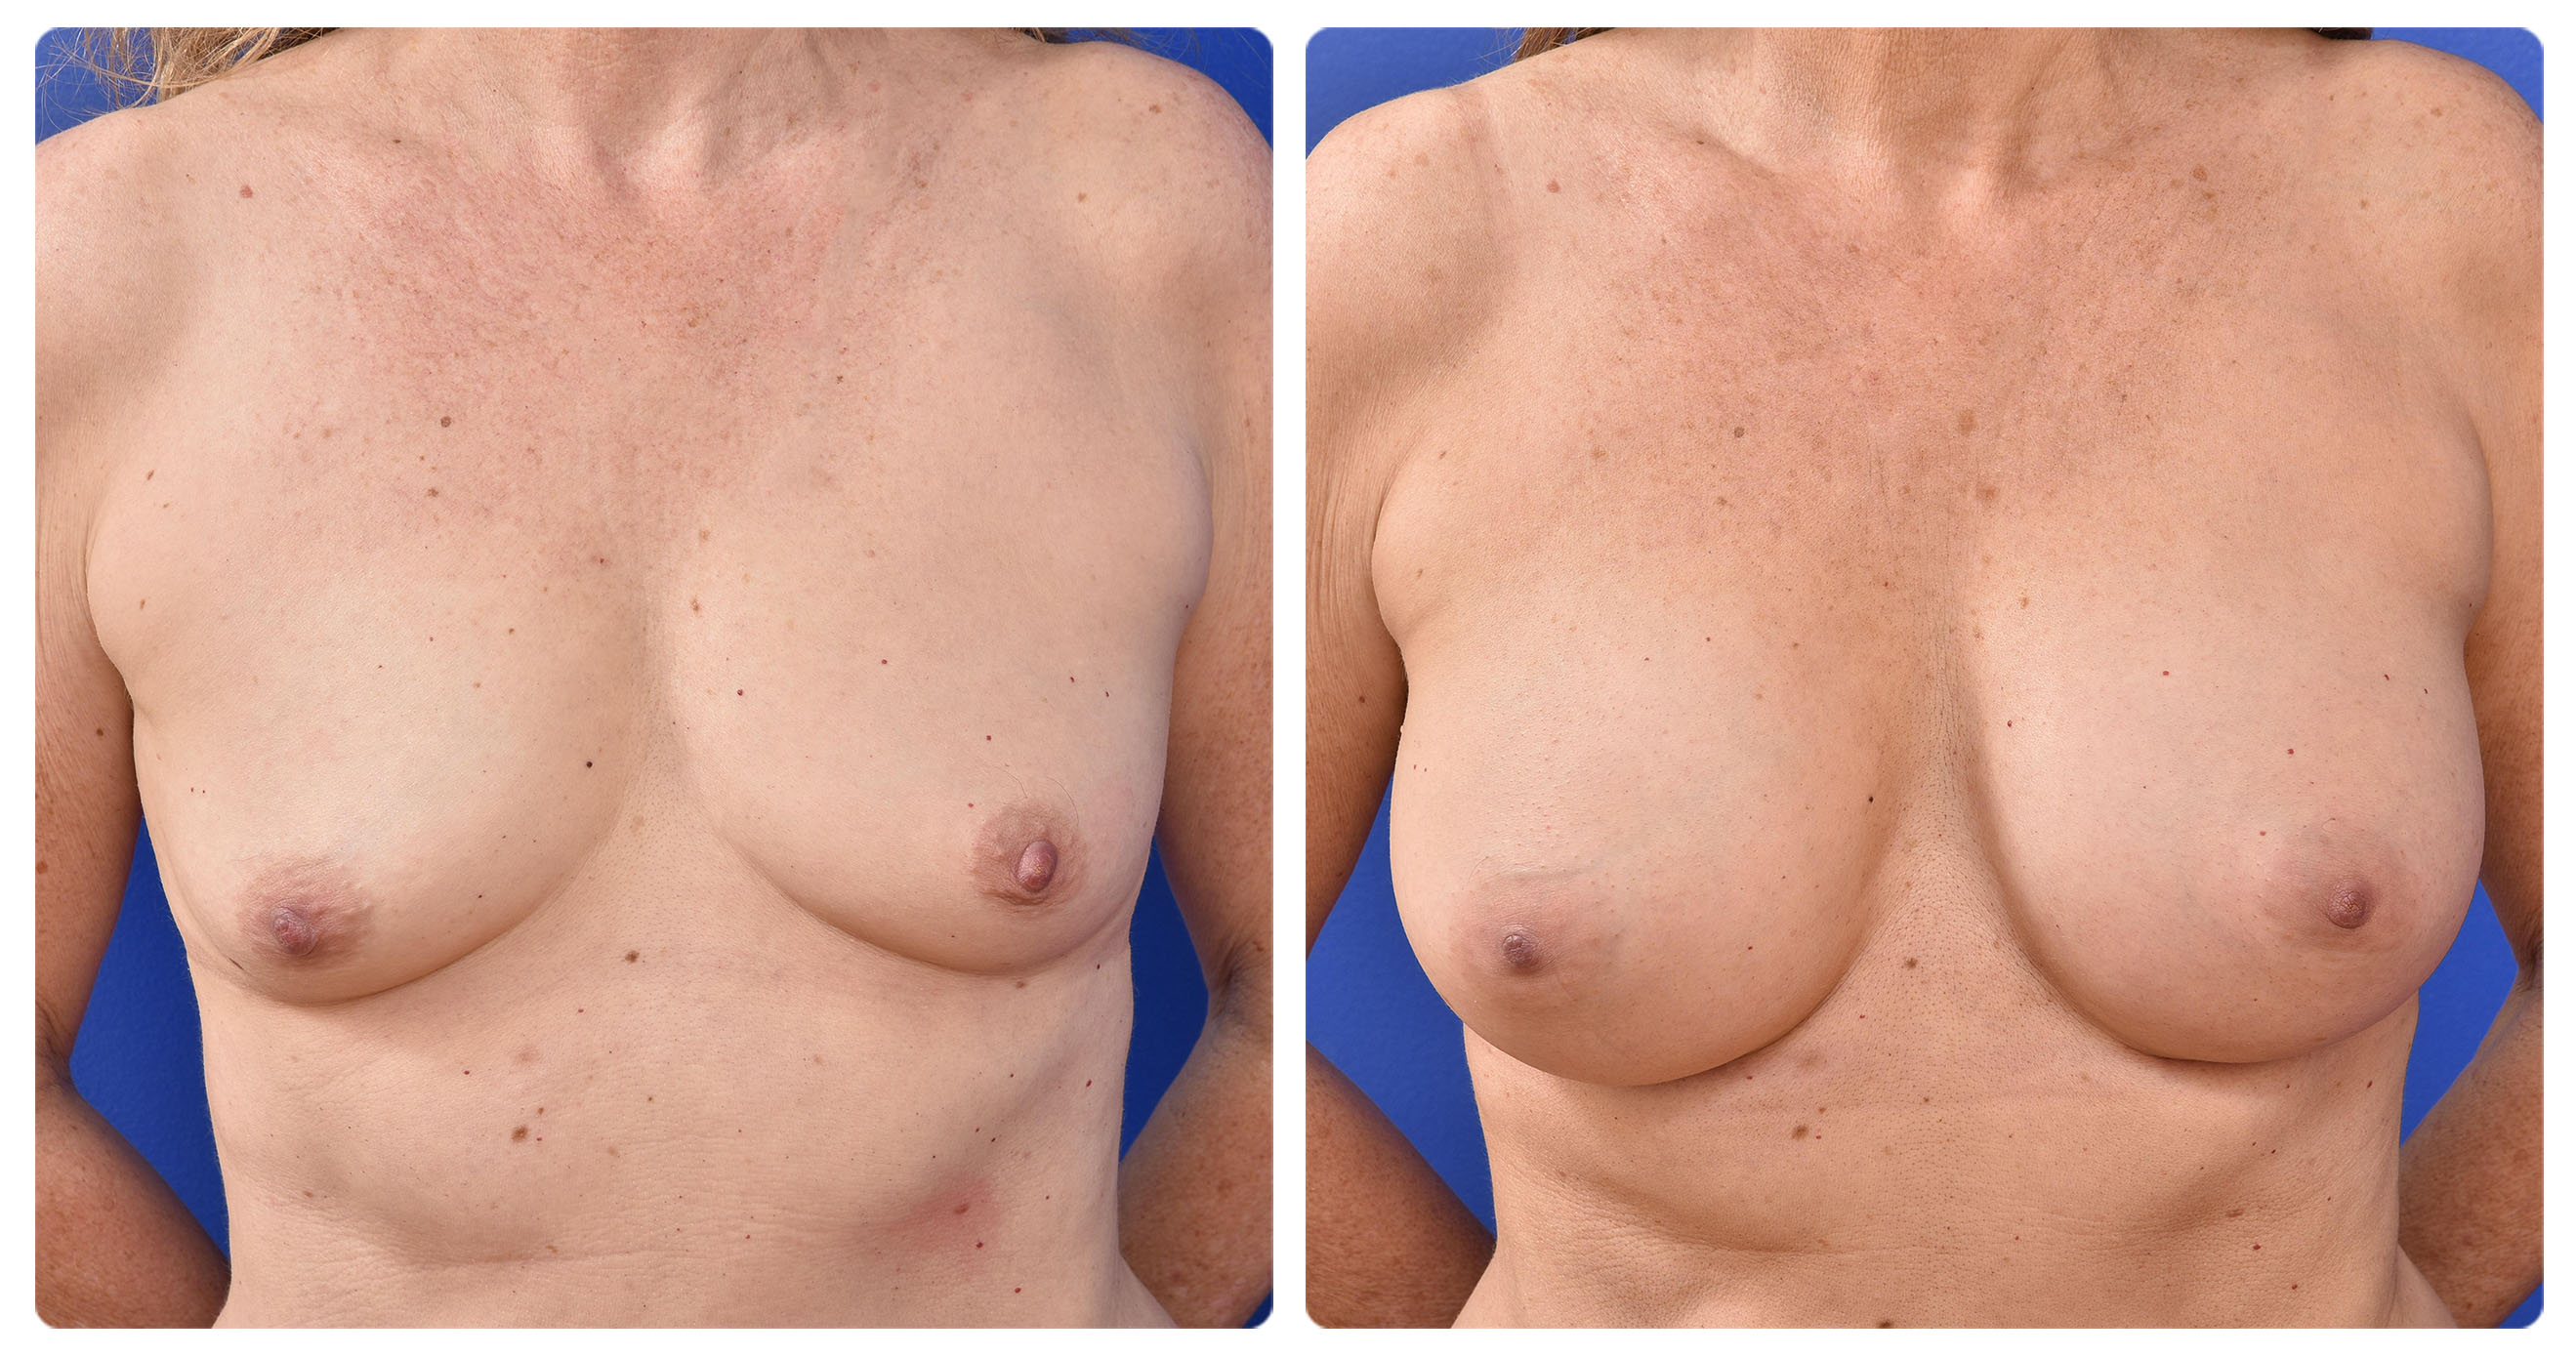 https://www.capsclinic.com.au/capsclinic/wp-content/uploads/sites/3/2019/01/BA-template_Breast-Aug-small-breast9_v2.jpg